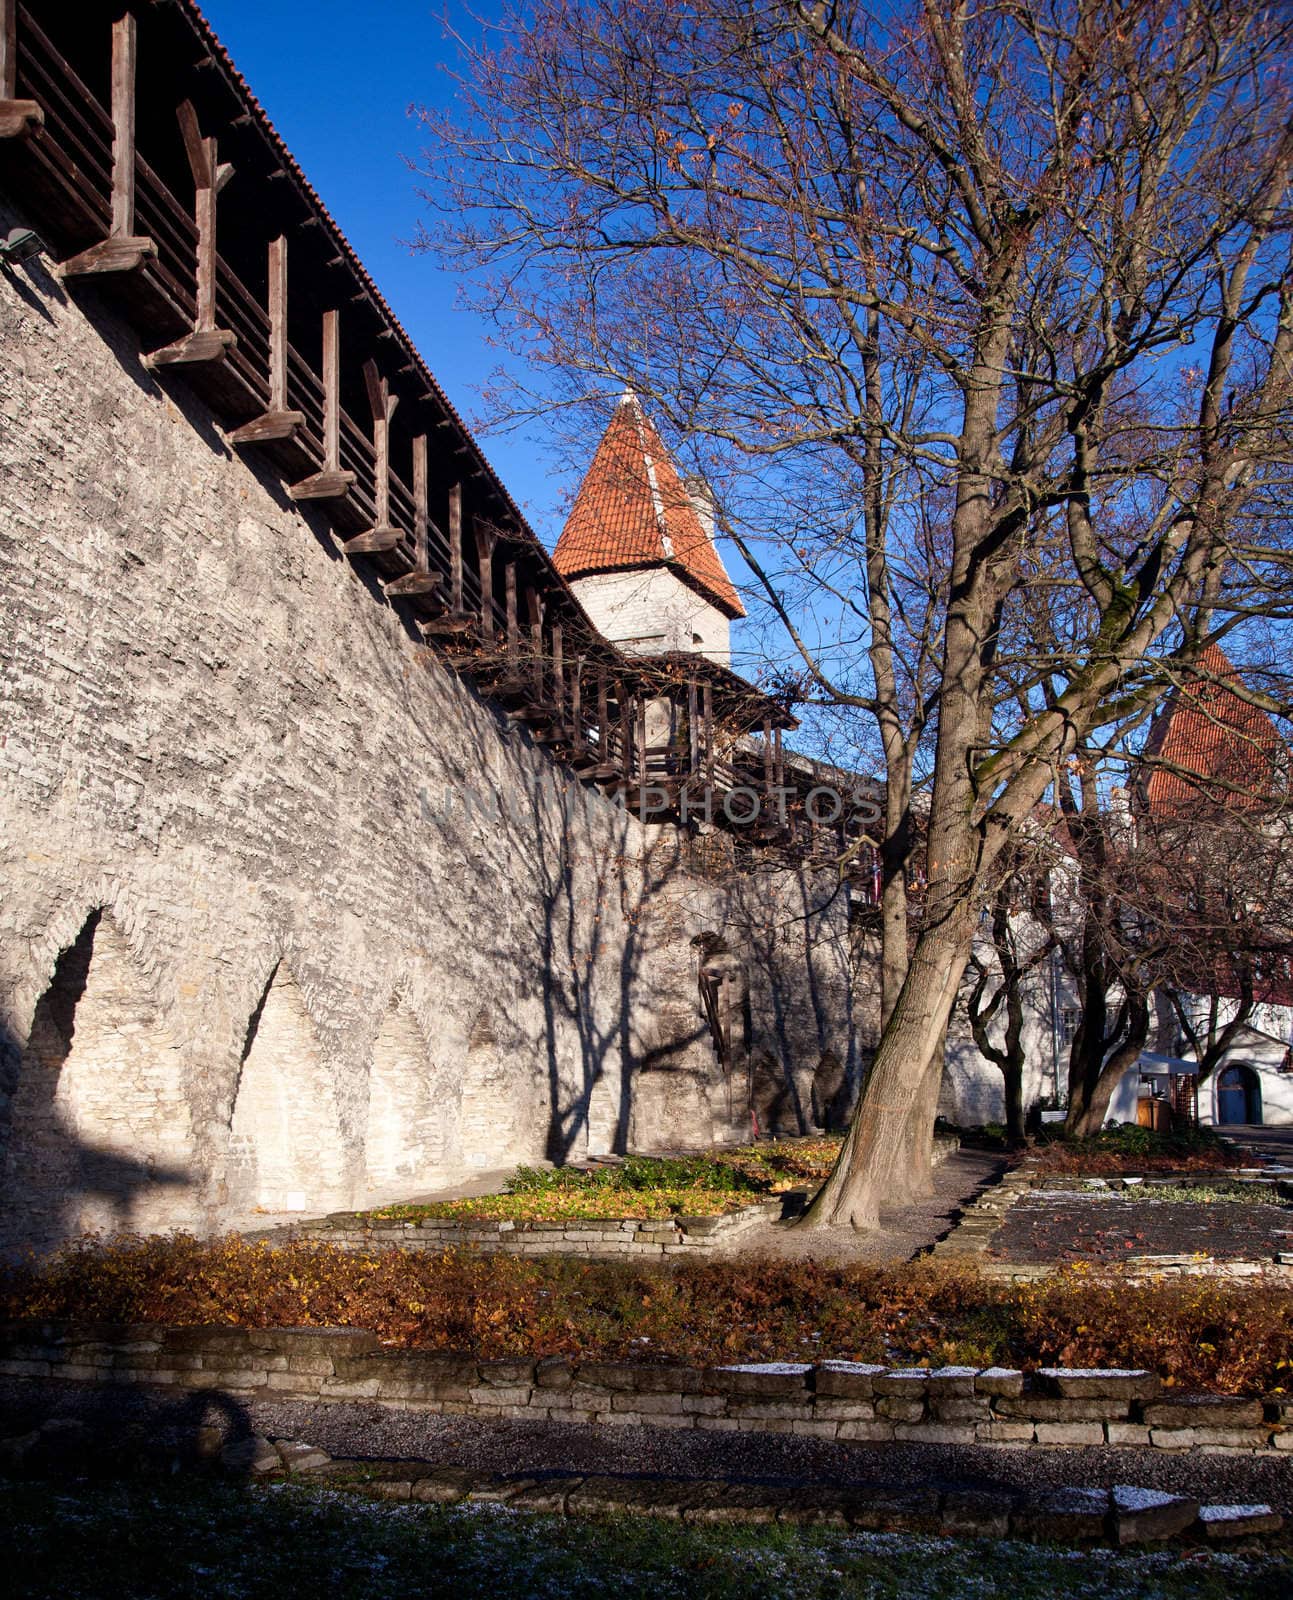 Town wall of Tallinn in Estonia in winter with small garden below the wooden walkways